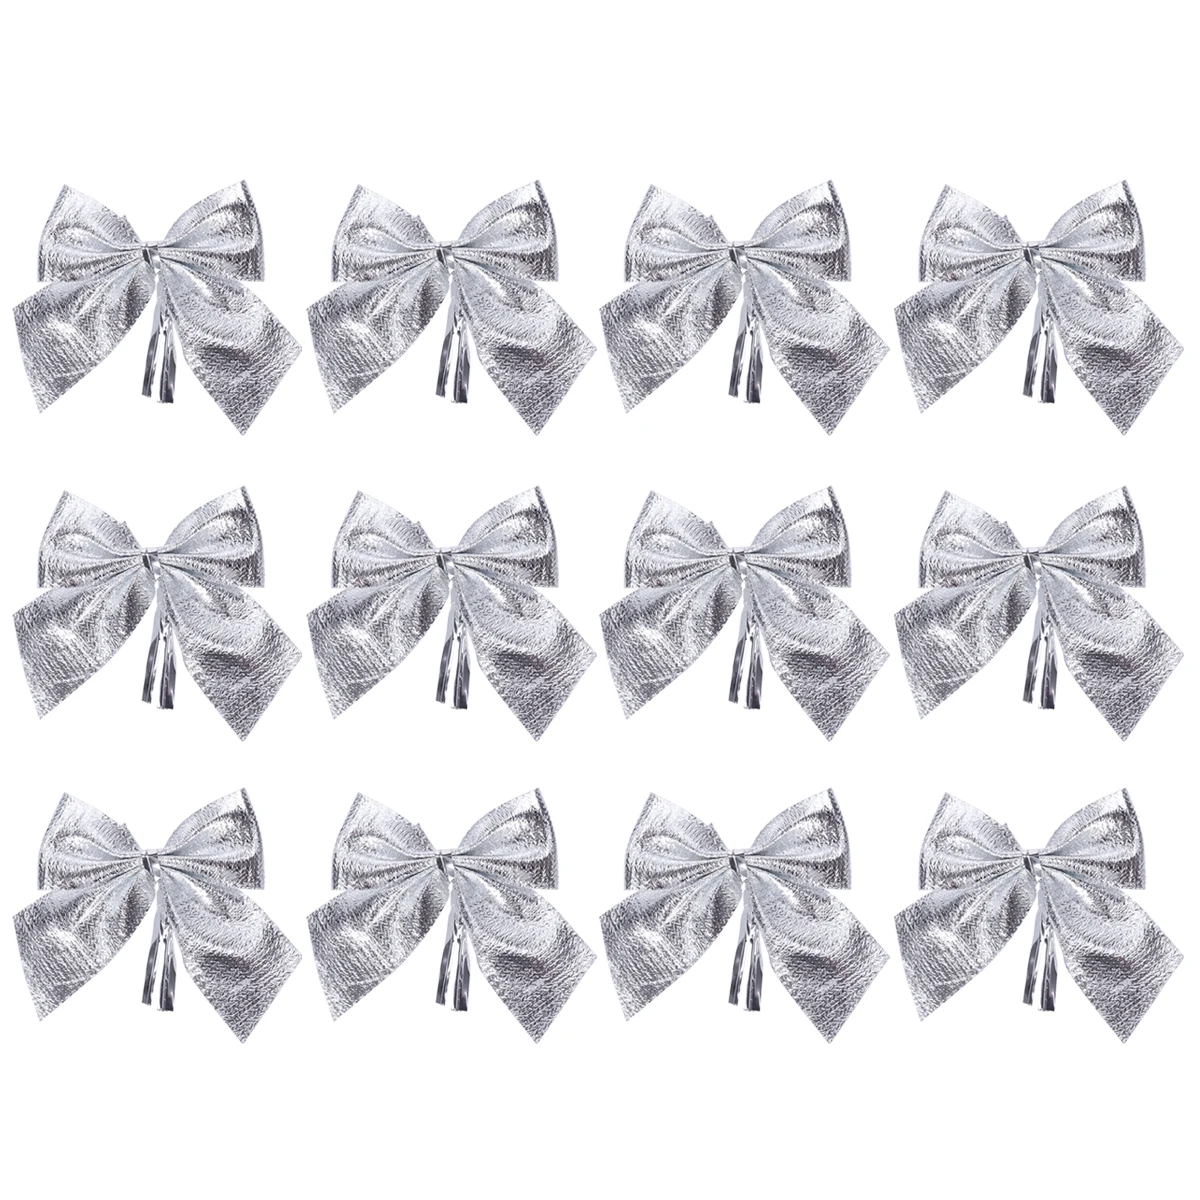 12pcs Glitter Bowknots Christmas Tree Ornaments Pendant Xmas Hanging Decor Adornments Holiday Home Party Supplies(Silver) A20